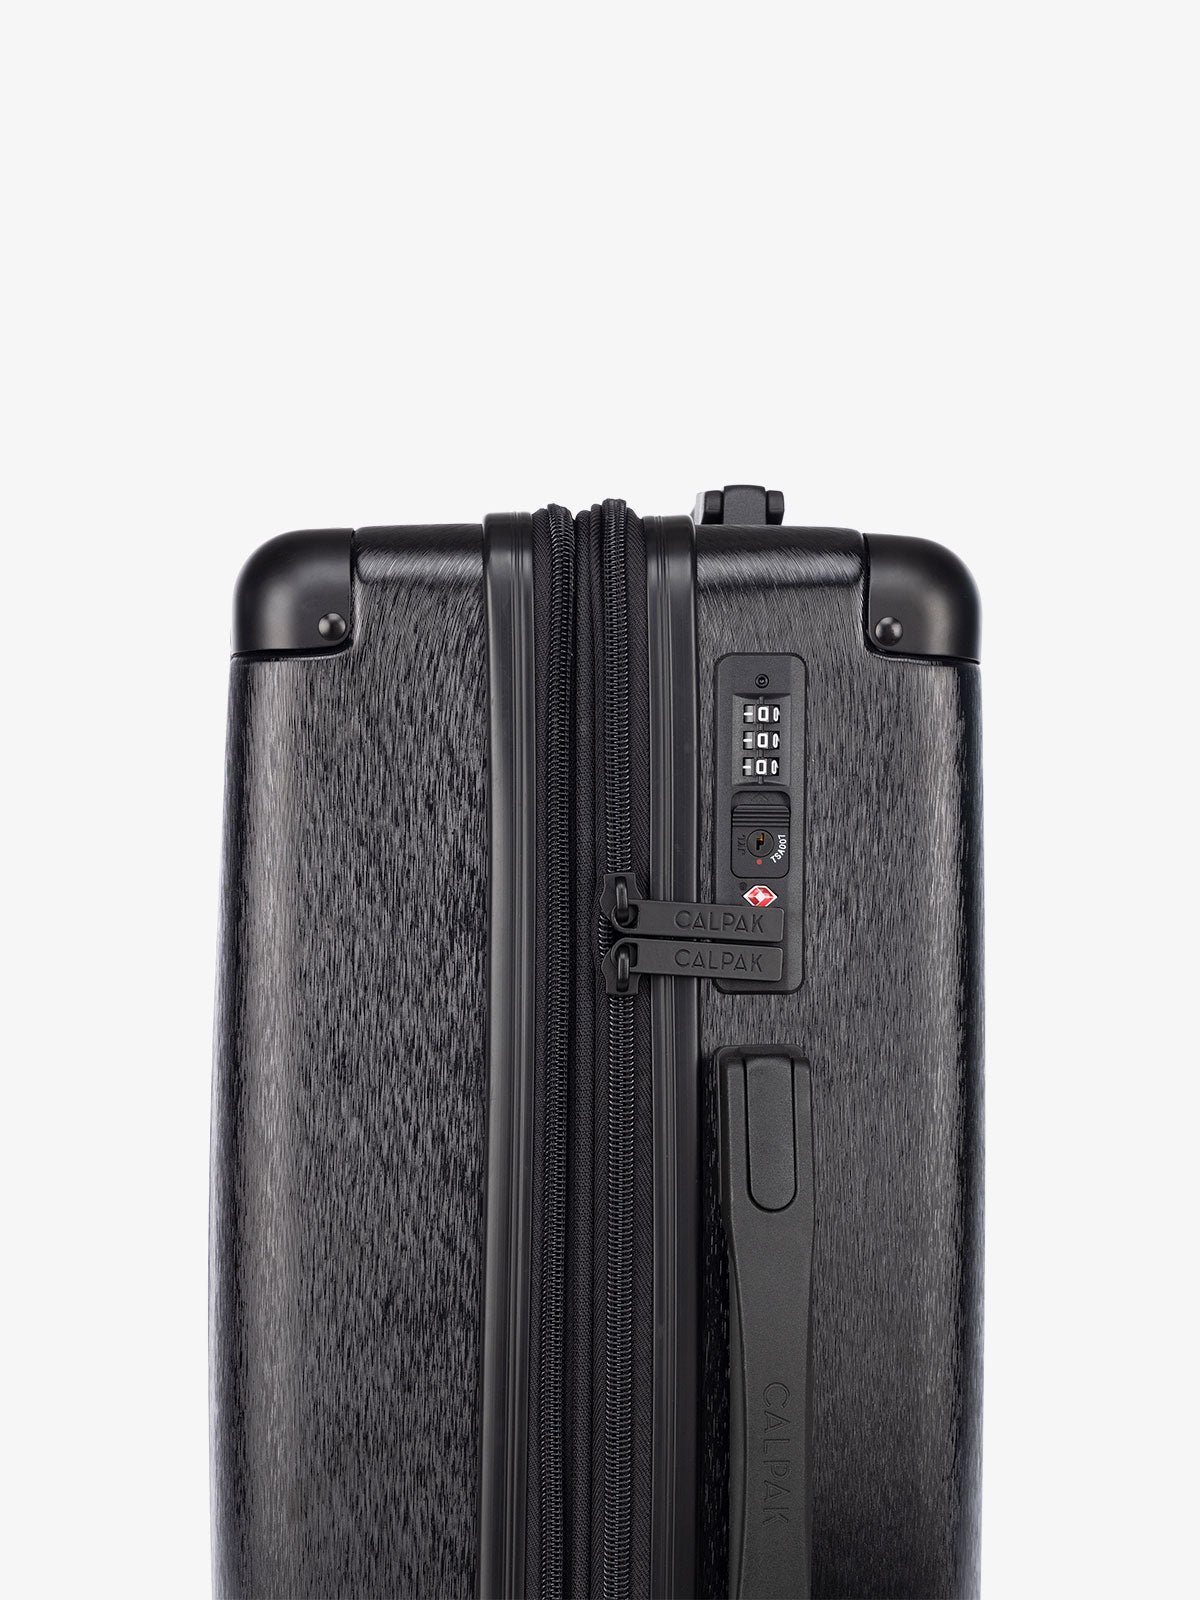 CALPAK Ambeur black large size expandable suitcase with built in TSA lock